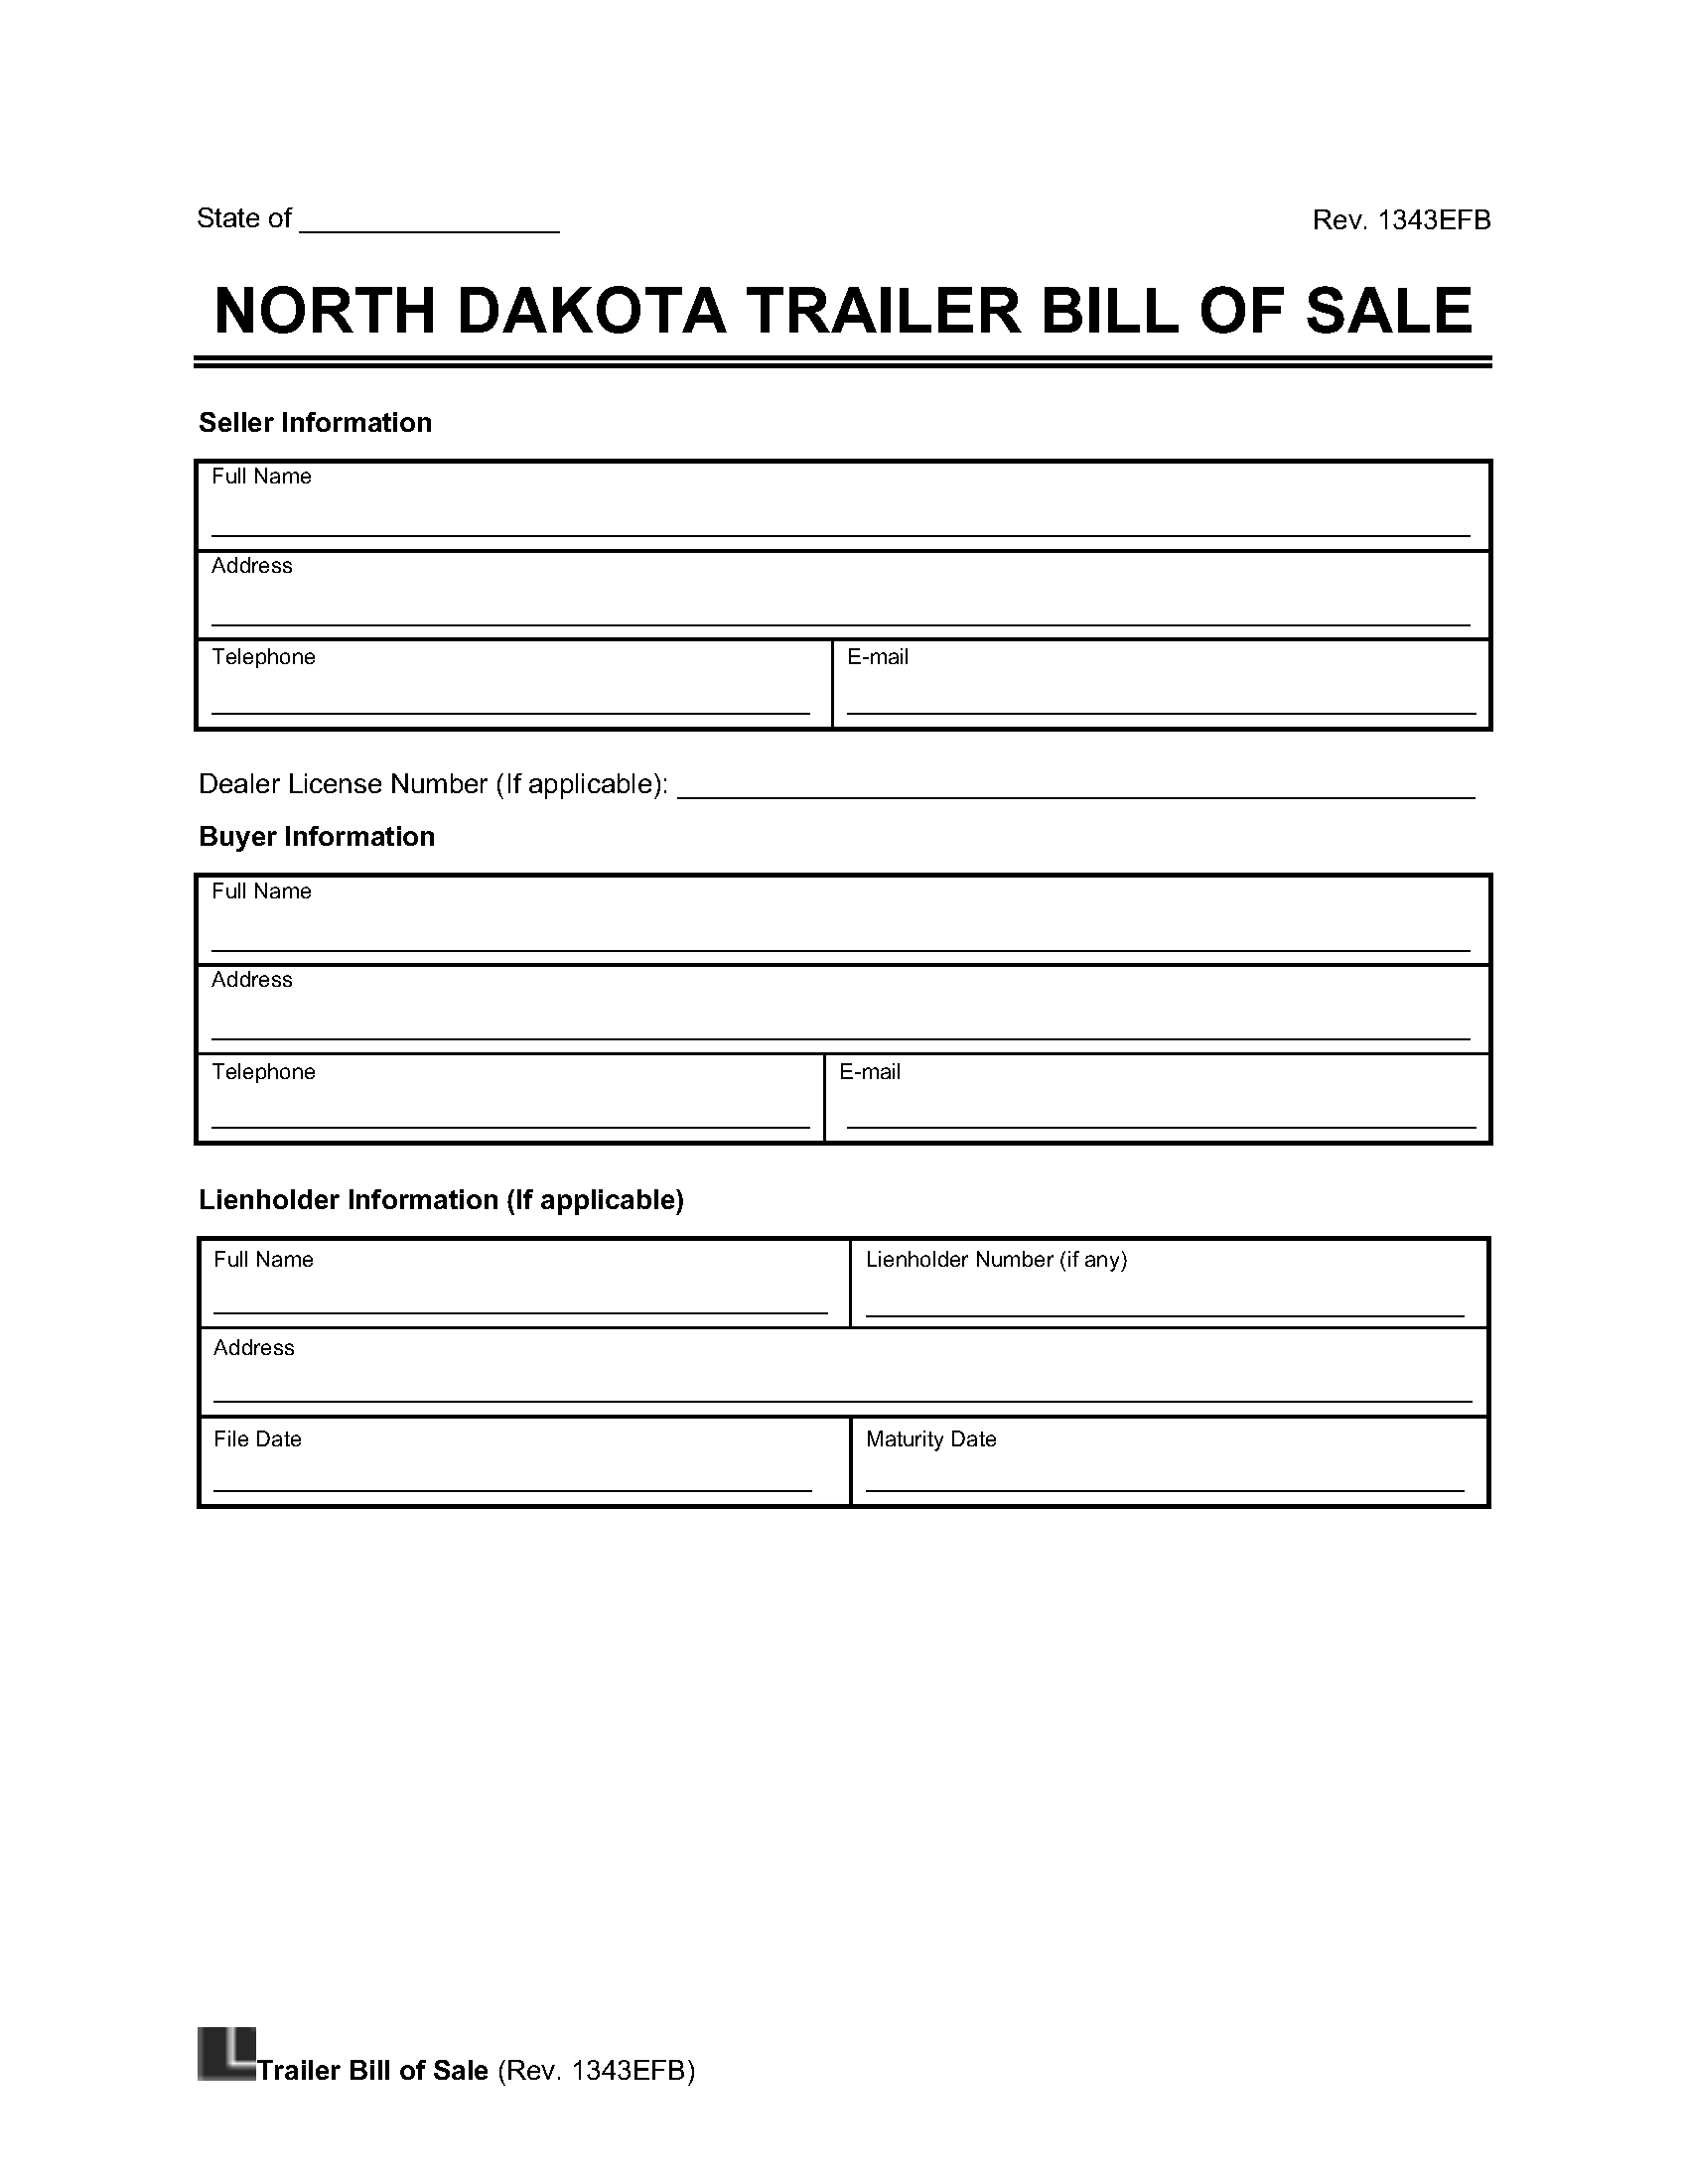 North Dakota Trailer Bill of Sale screenshot